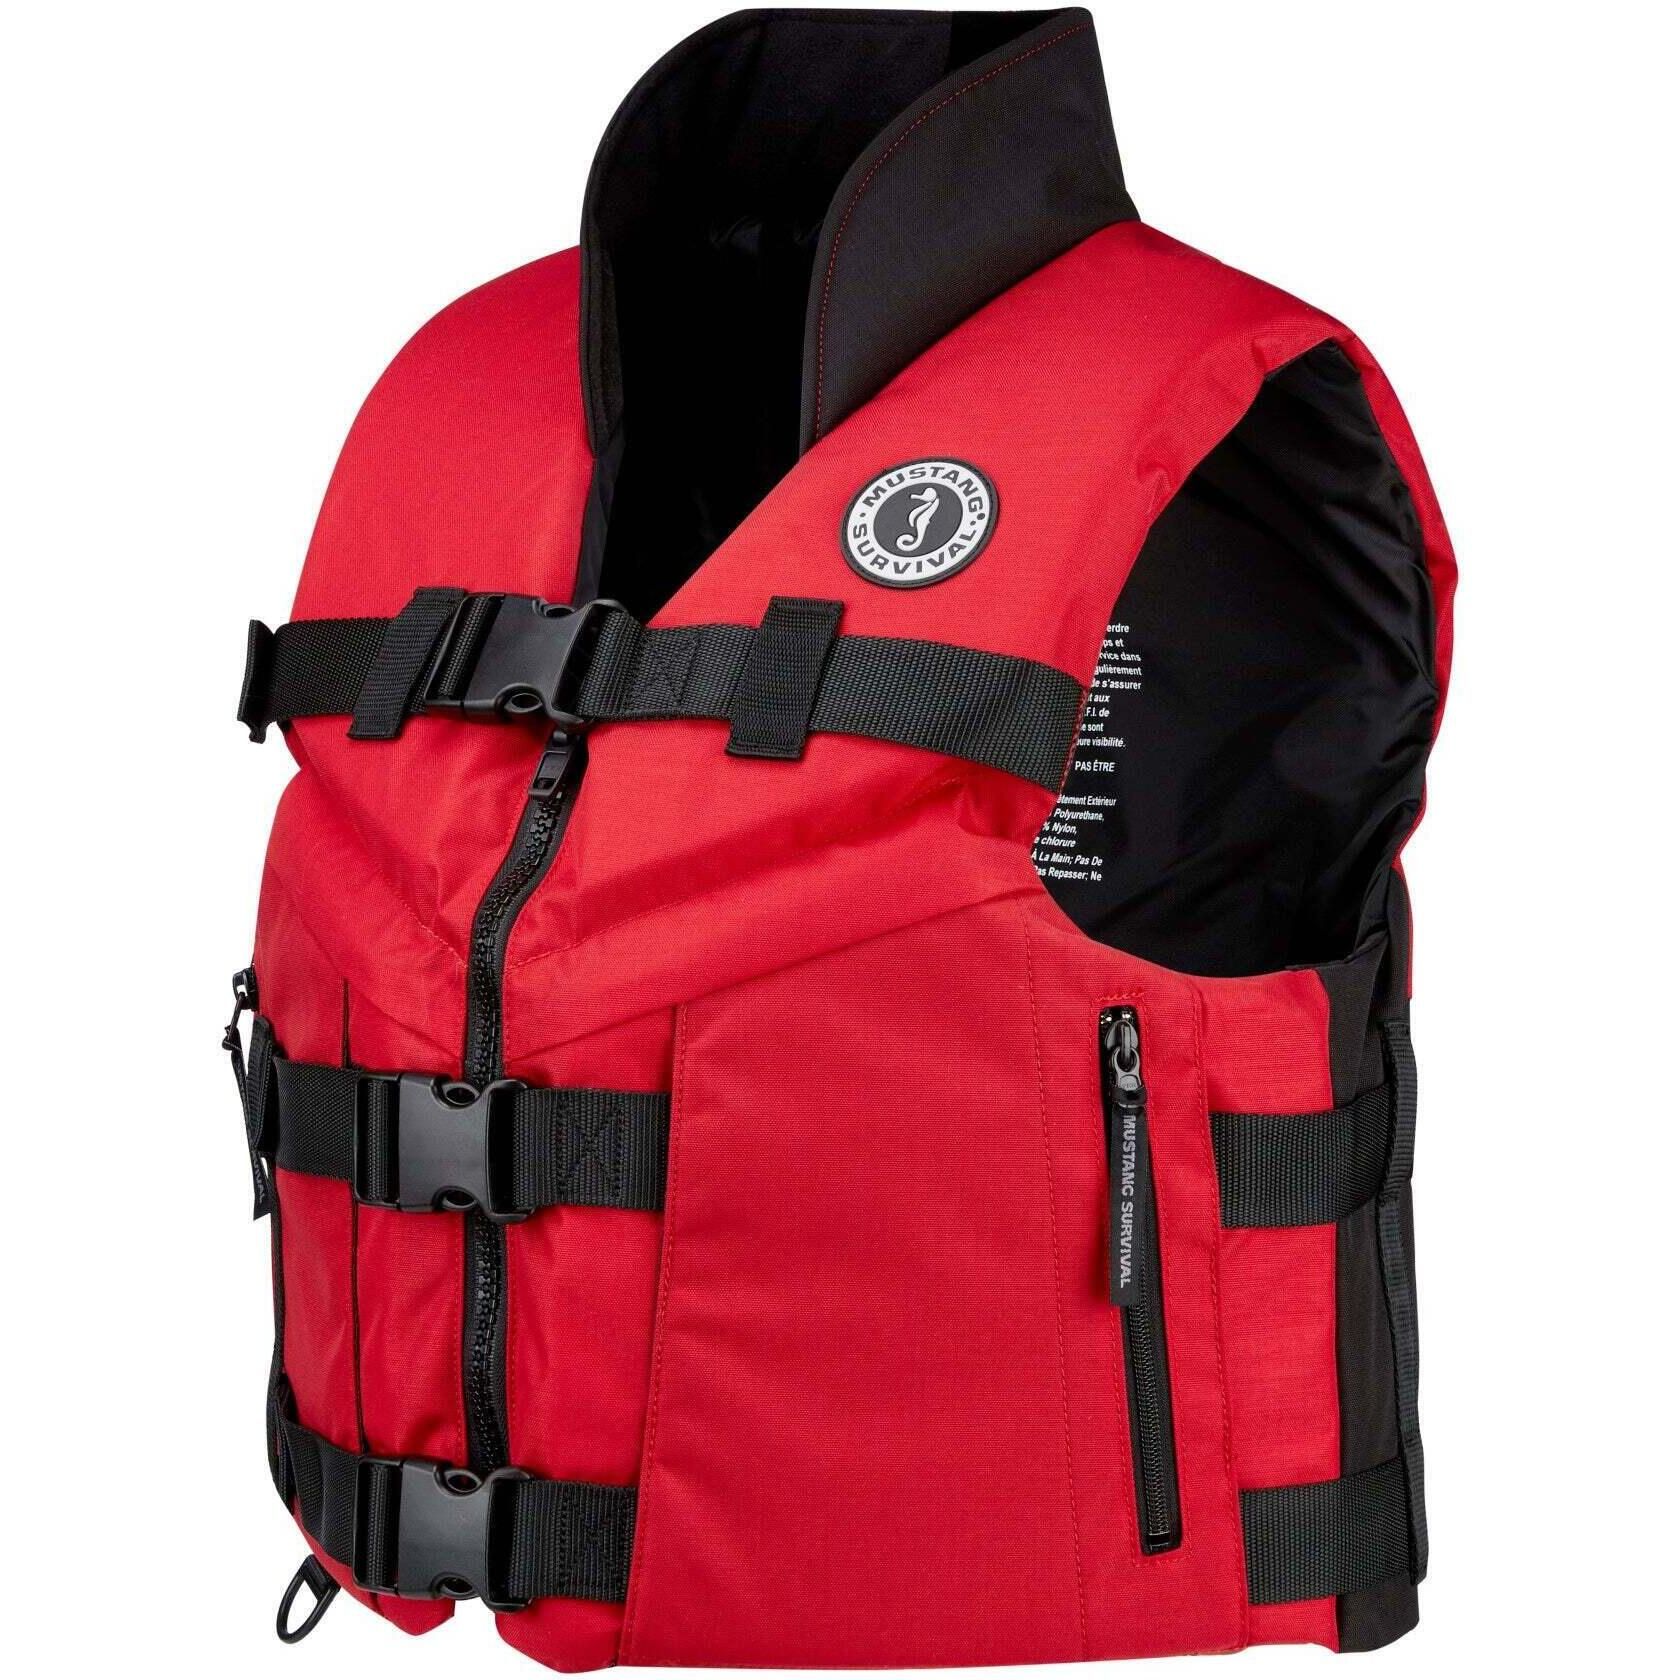 https://defender.com/media/catalog/product/cache/a2bf45e9635ff86c8c09fbc84b193941/catalogimages/mustang-survival/accel-100-fishing-vest-pfd-life-jacket-red-black-mv4626-123-s.jpg